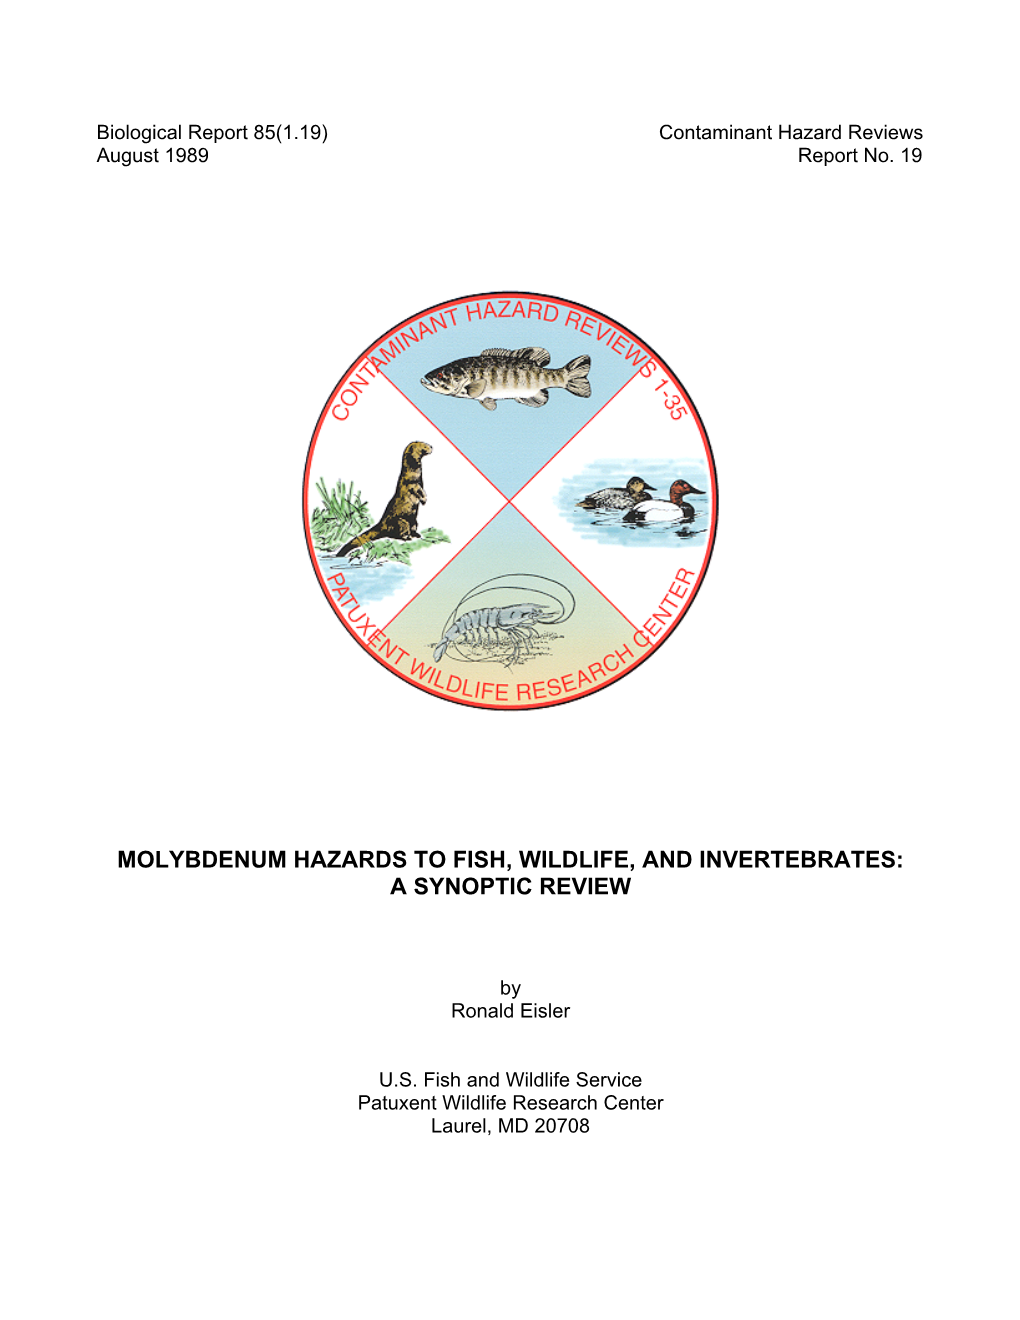 Eisler. 1989. Molybdenum Hazards to Fish, Wildlife, and Invertebrates: A